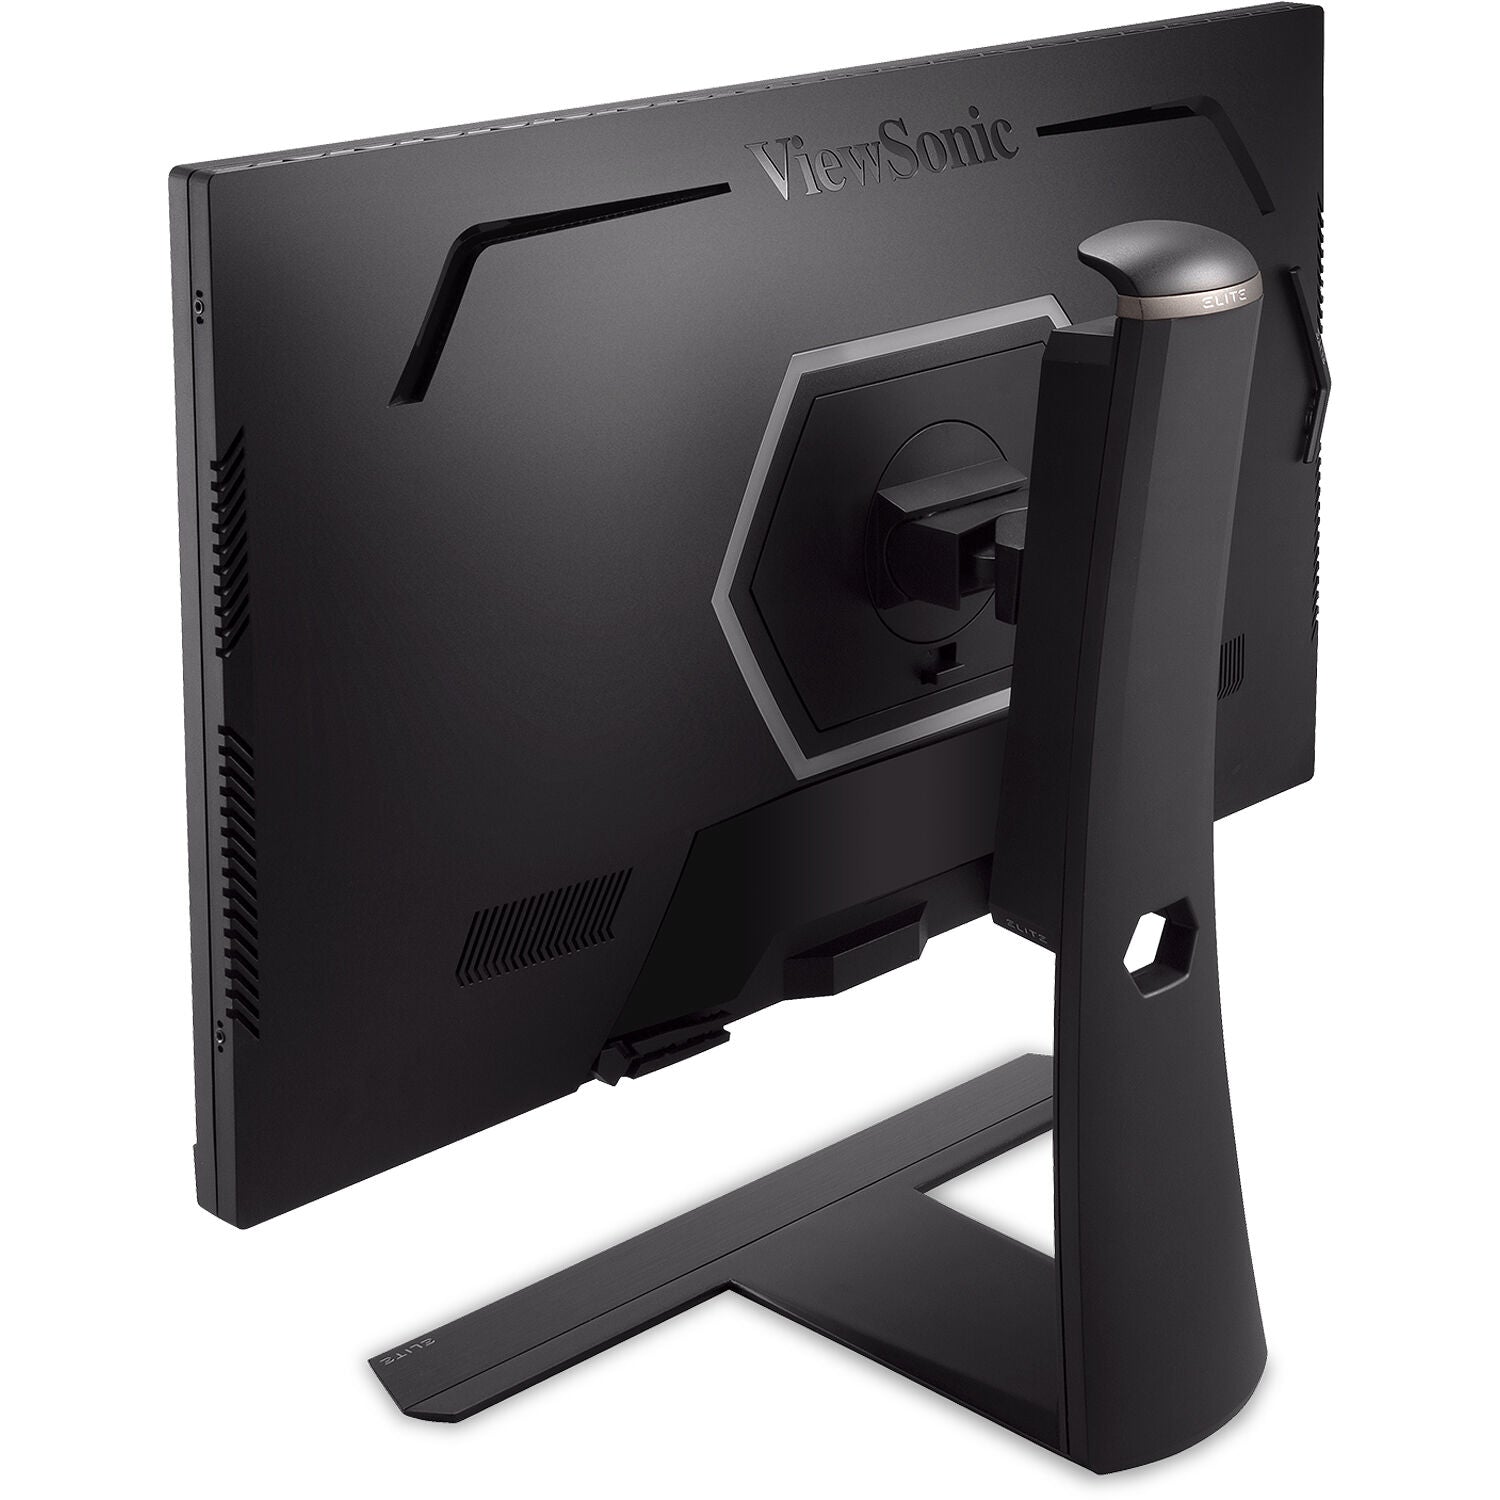 ViewSonic XG271QG-R 27" 240Hz IPS Gaming Monitor - Certified Refurbished